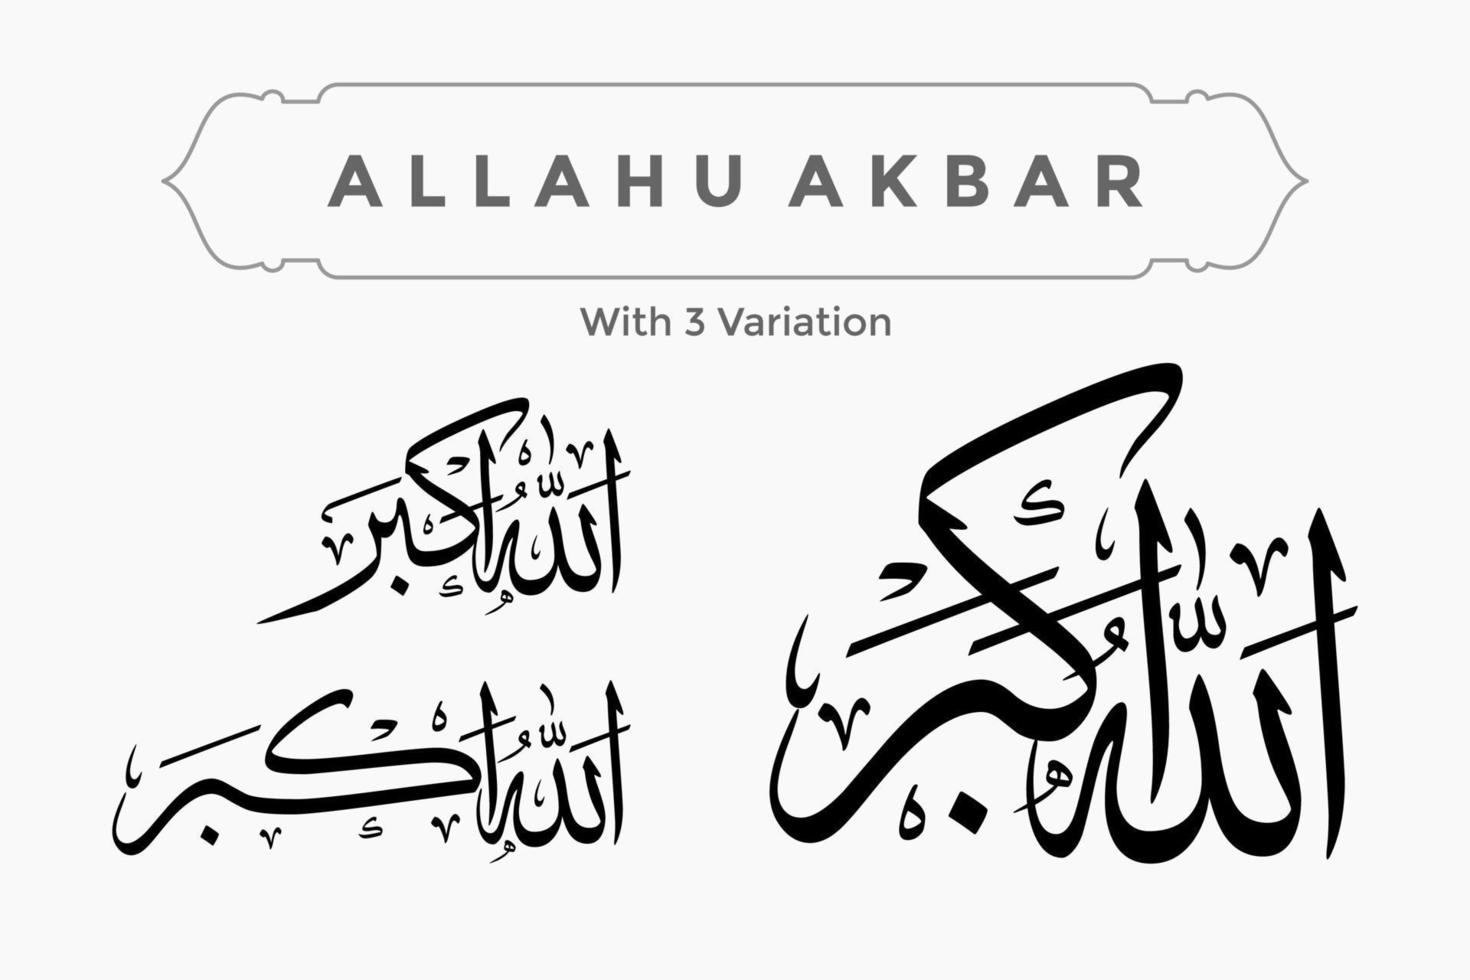 alhamdulillah, subhanallah, allahu akbar, tasbih, kalligrafi design mall vektor